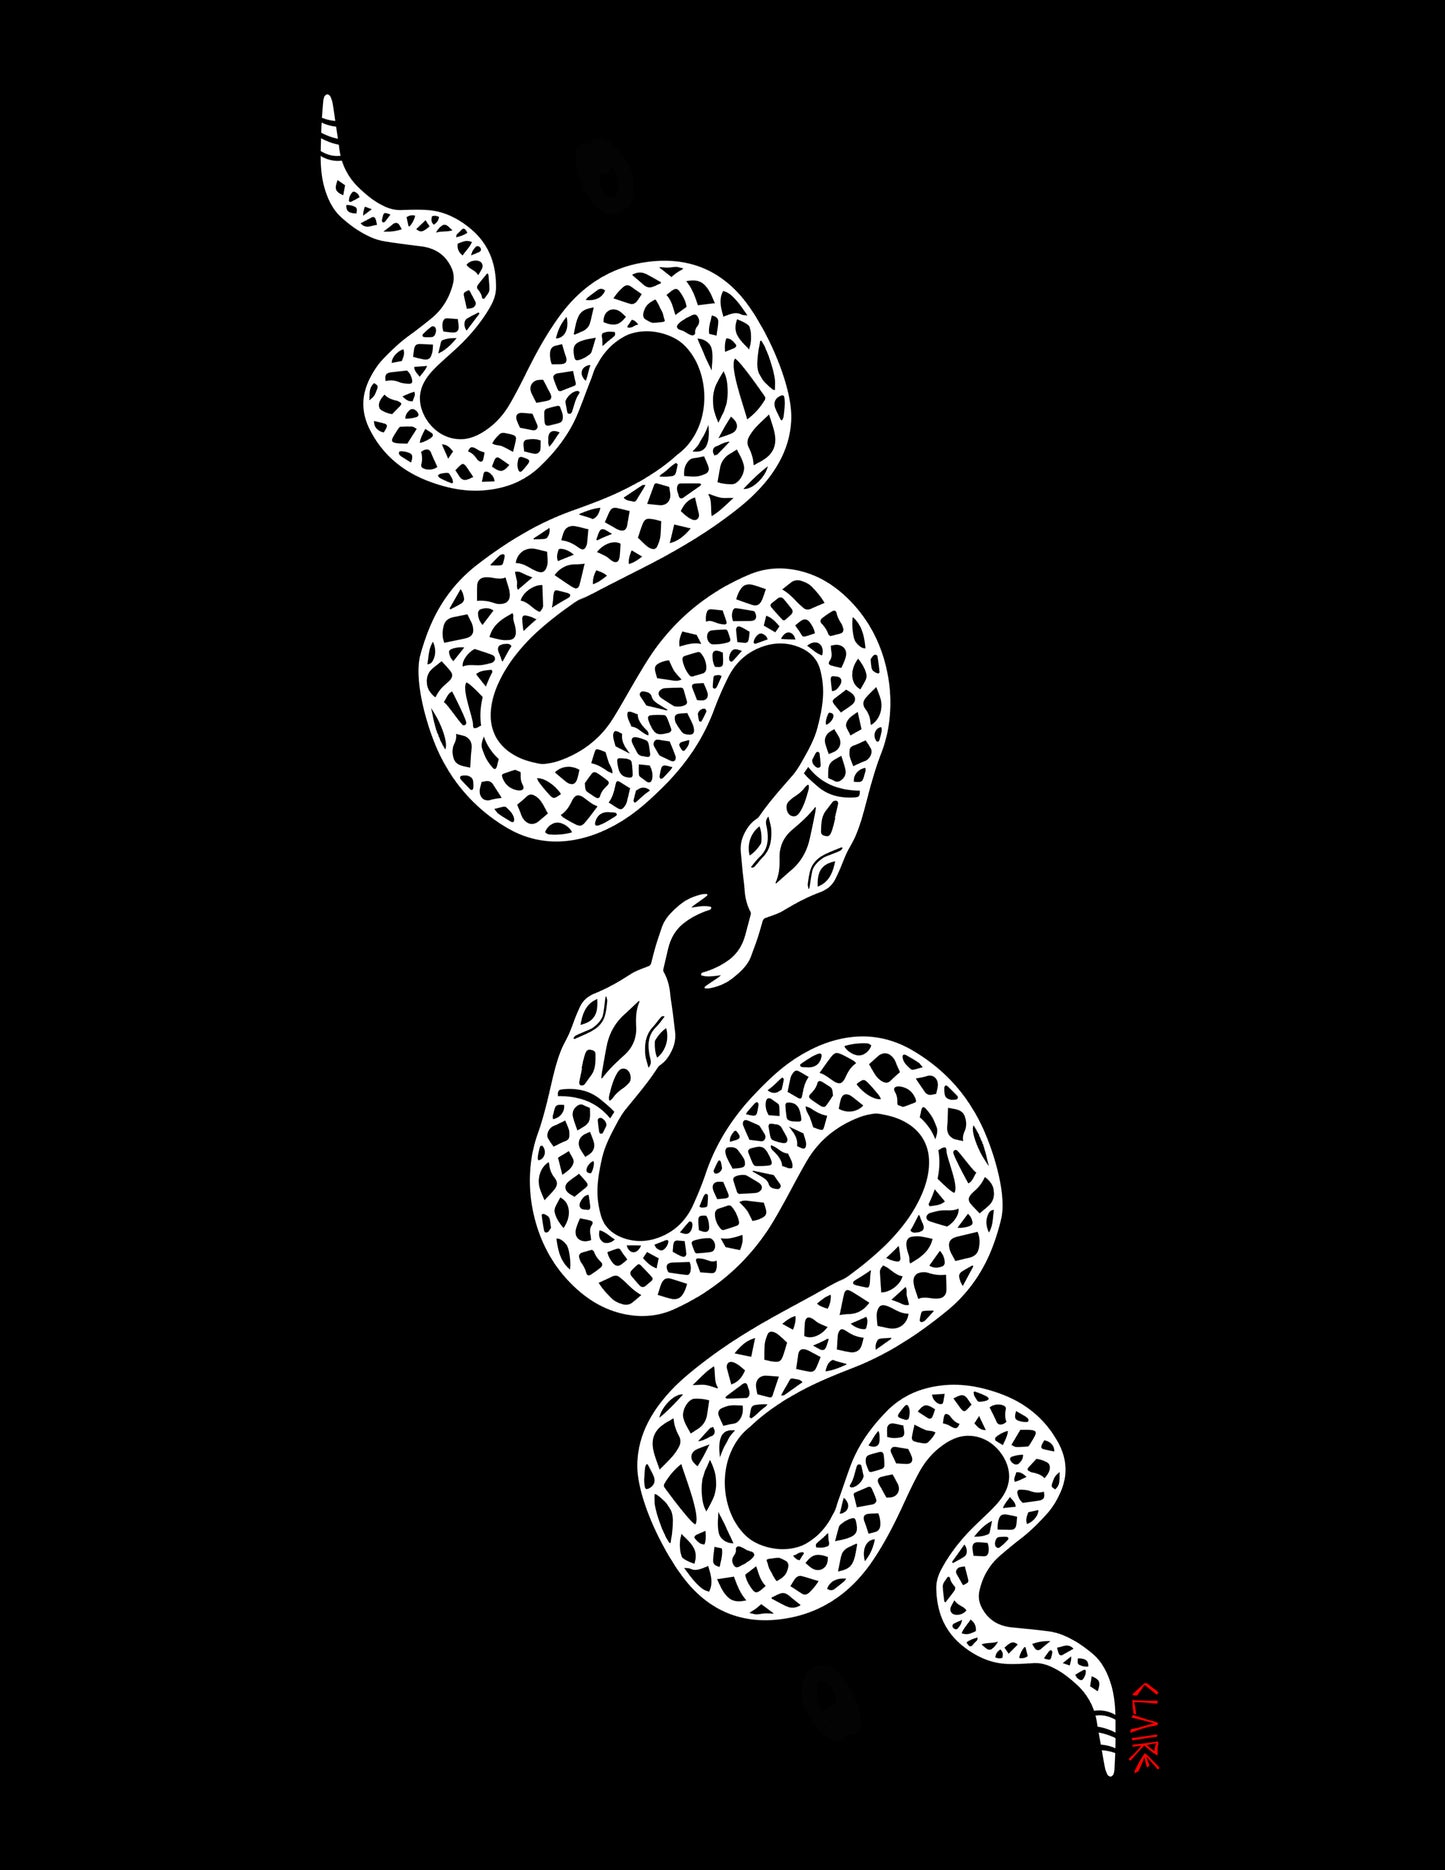 Snakes (Print)